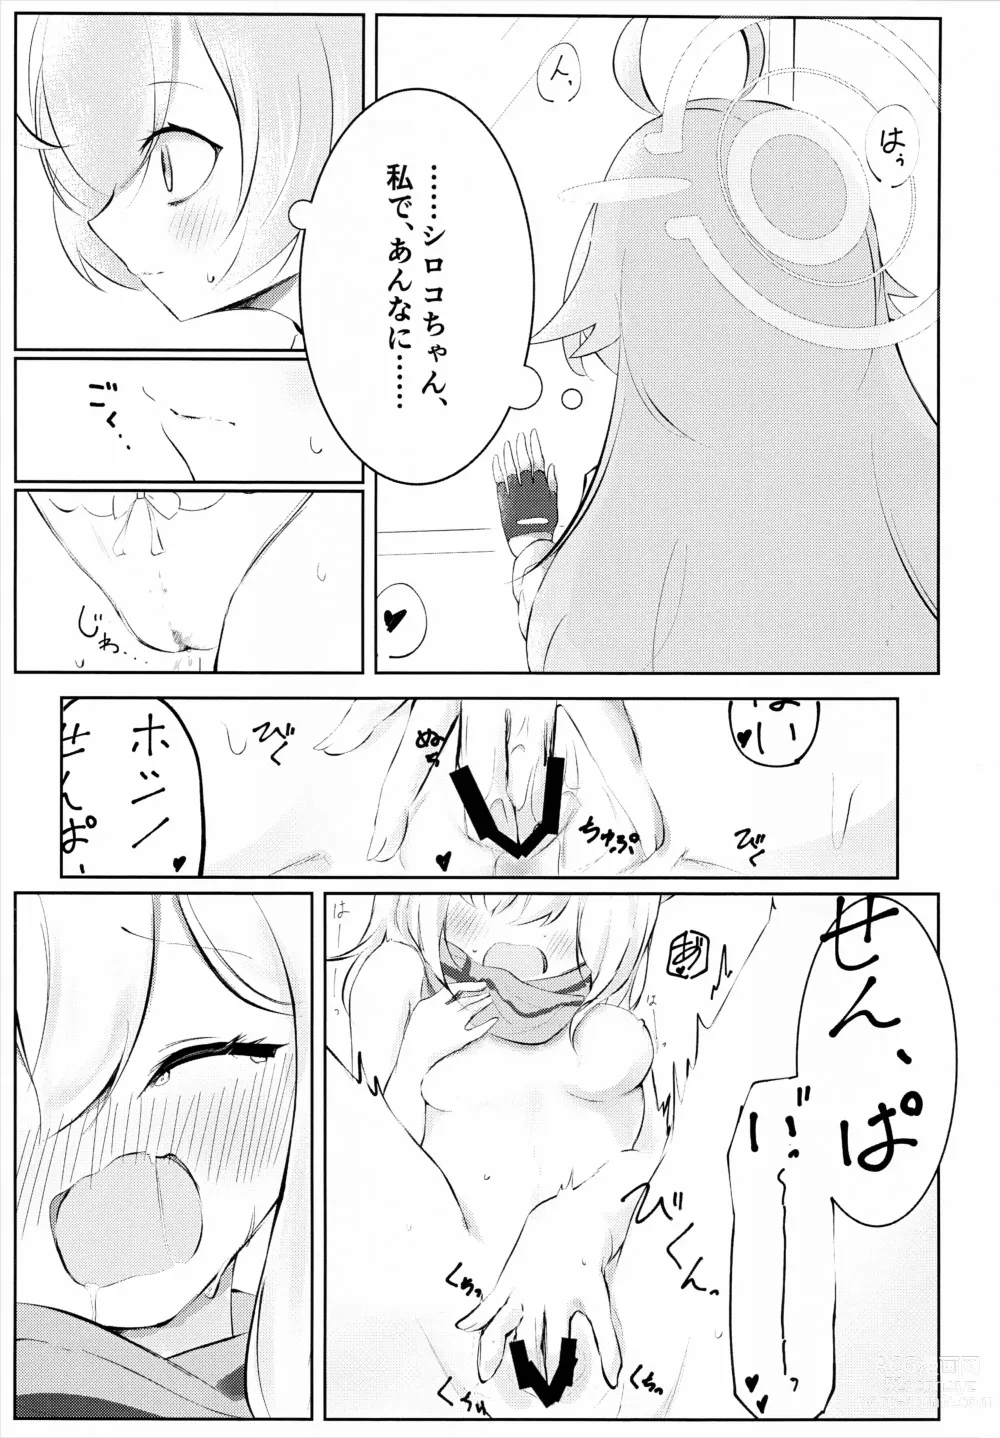 Page 12 of doujinshi Hakusyoku Aisei